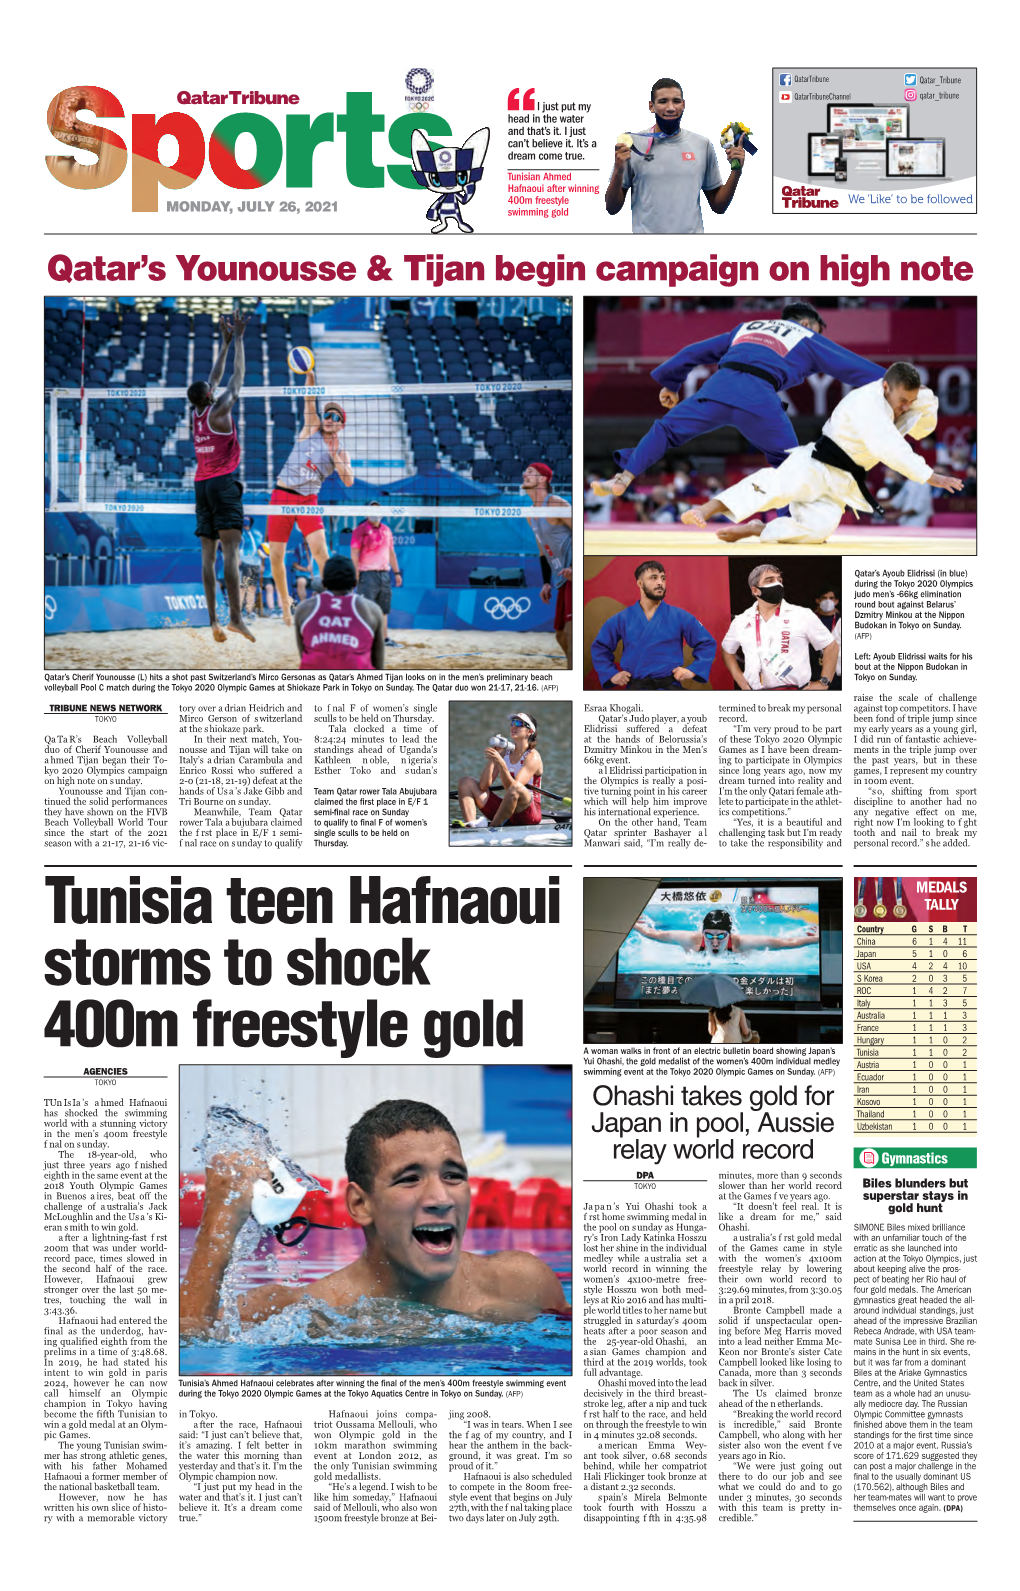 Tunisia Teen Hafnaoui Storms to Shock 400M Freestyle Gold